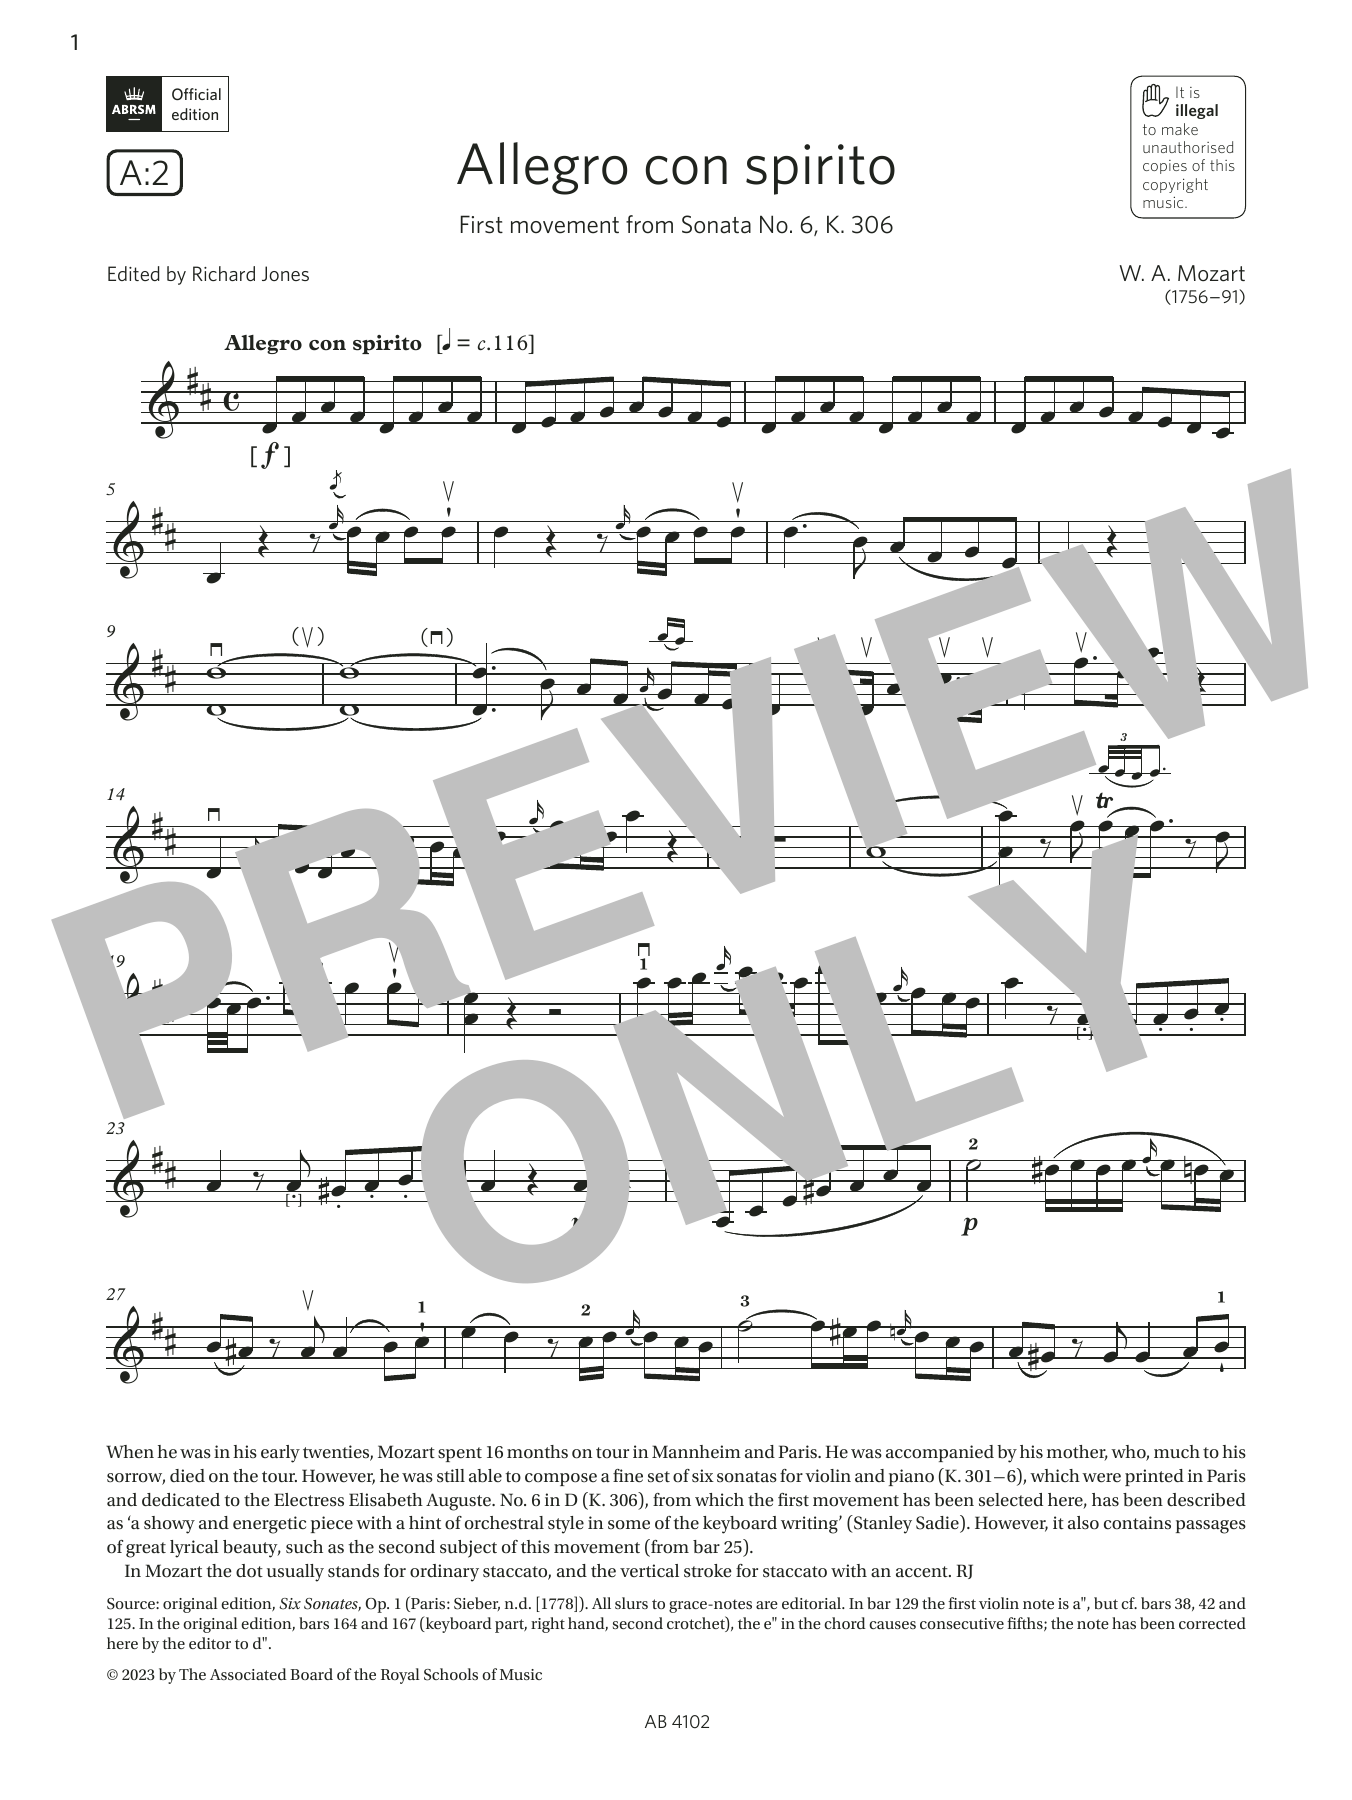 Download W. A. Mozart Allegro con spirito (Grade 8, A2, from Sheet Music